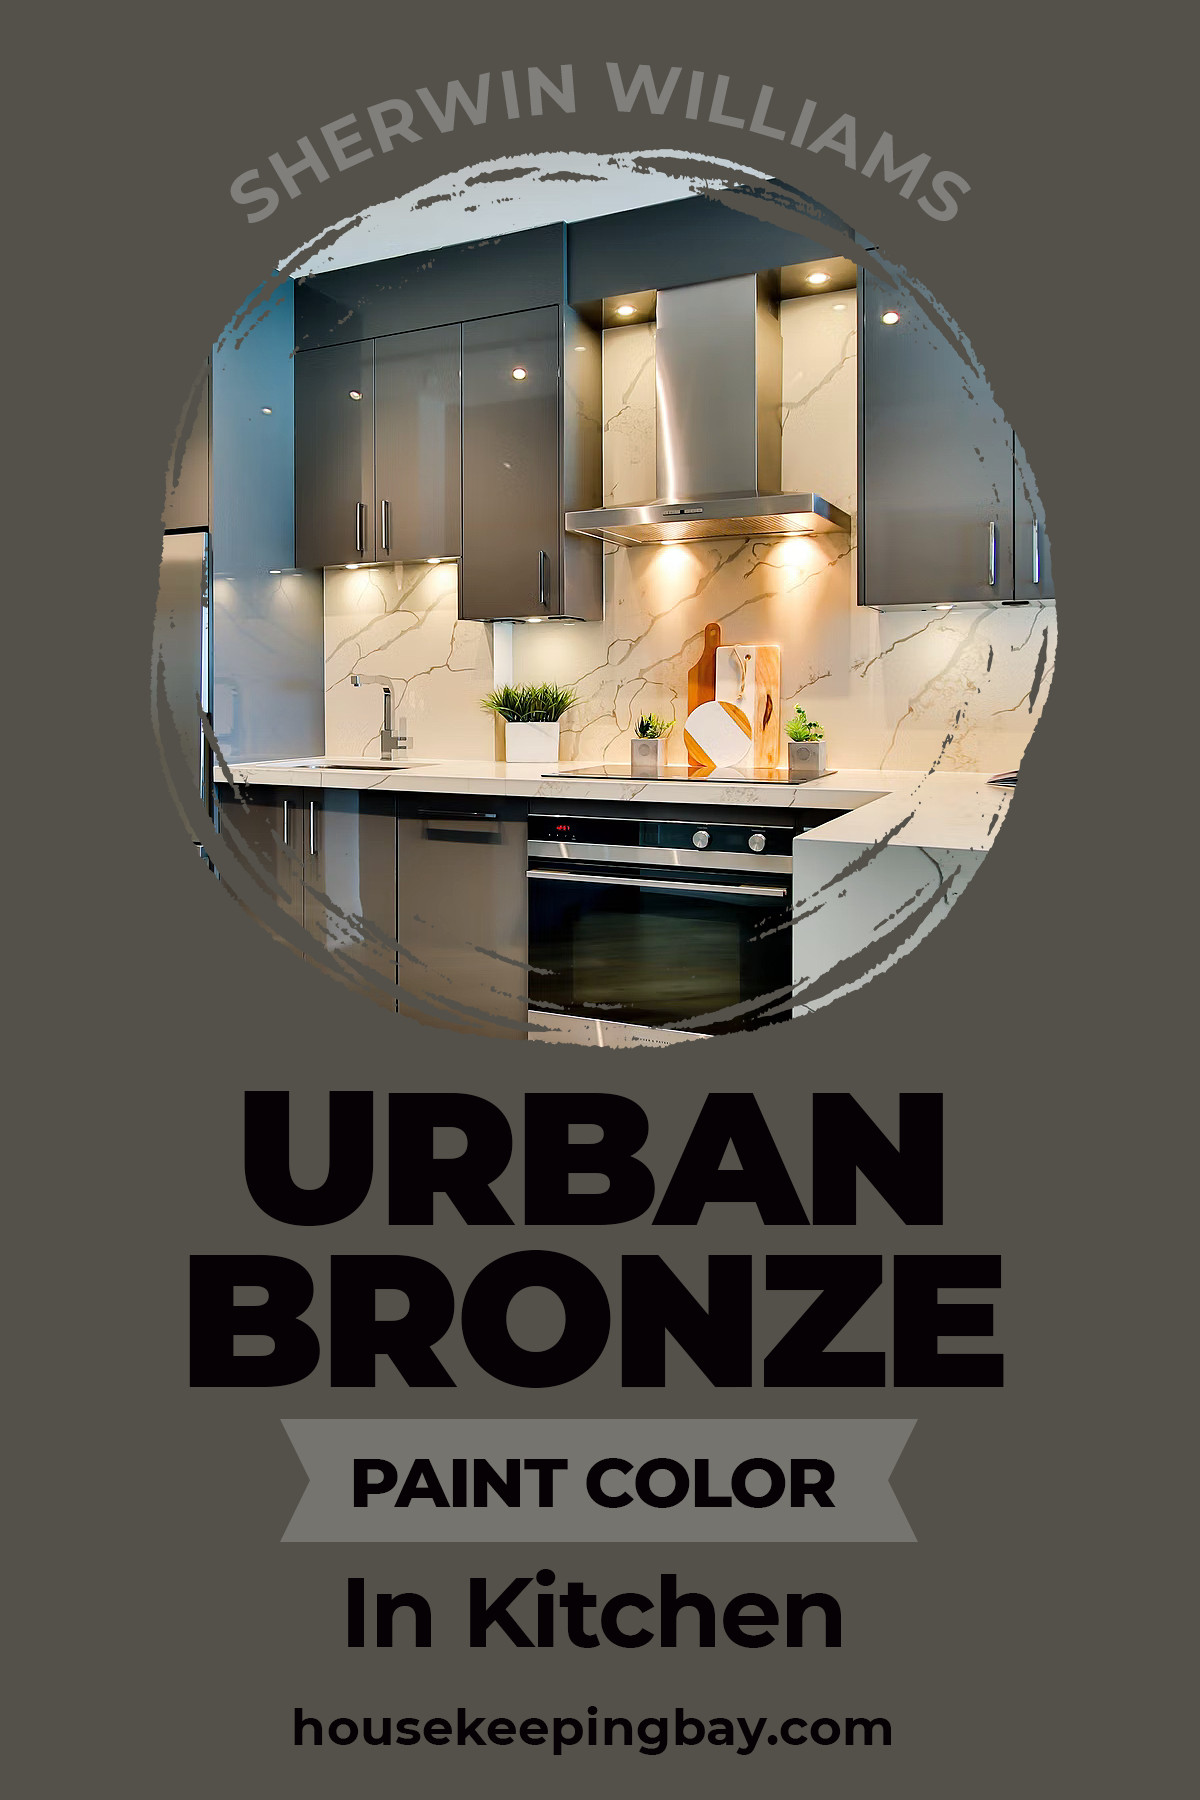 Urban Bronze Paint Color in kitchen